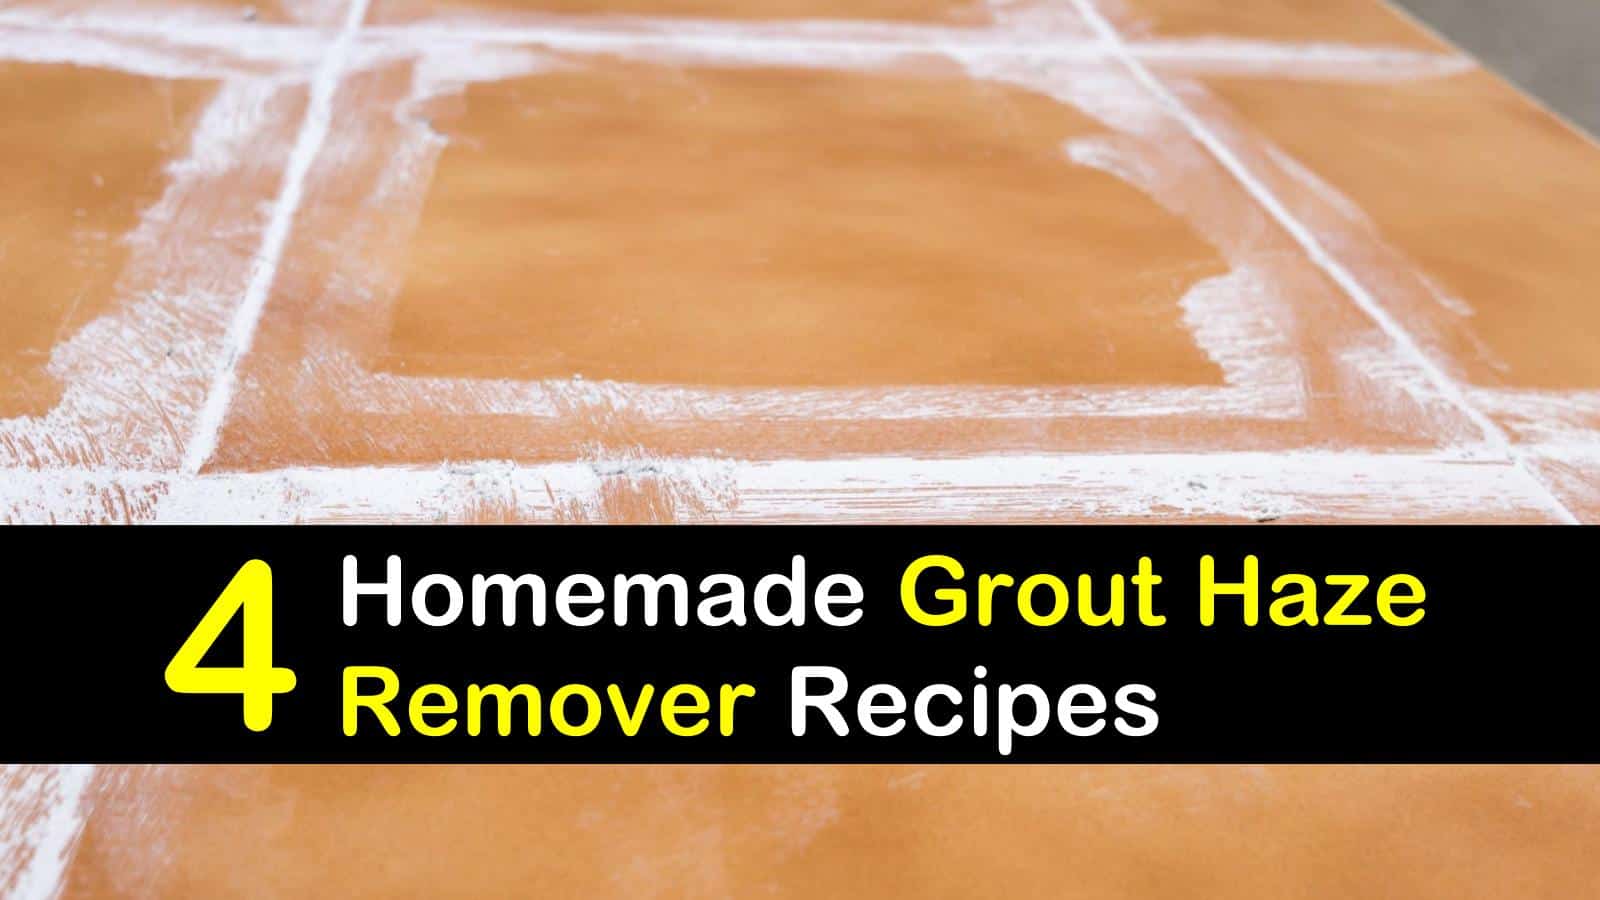 Homemade Grout Haze Remover